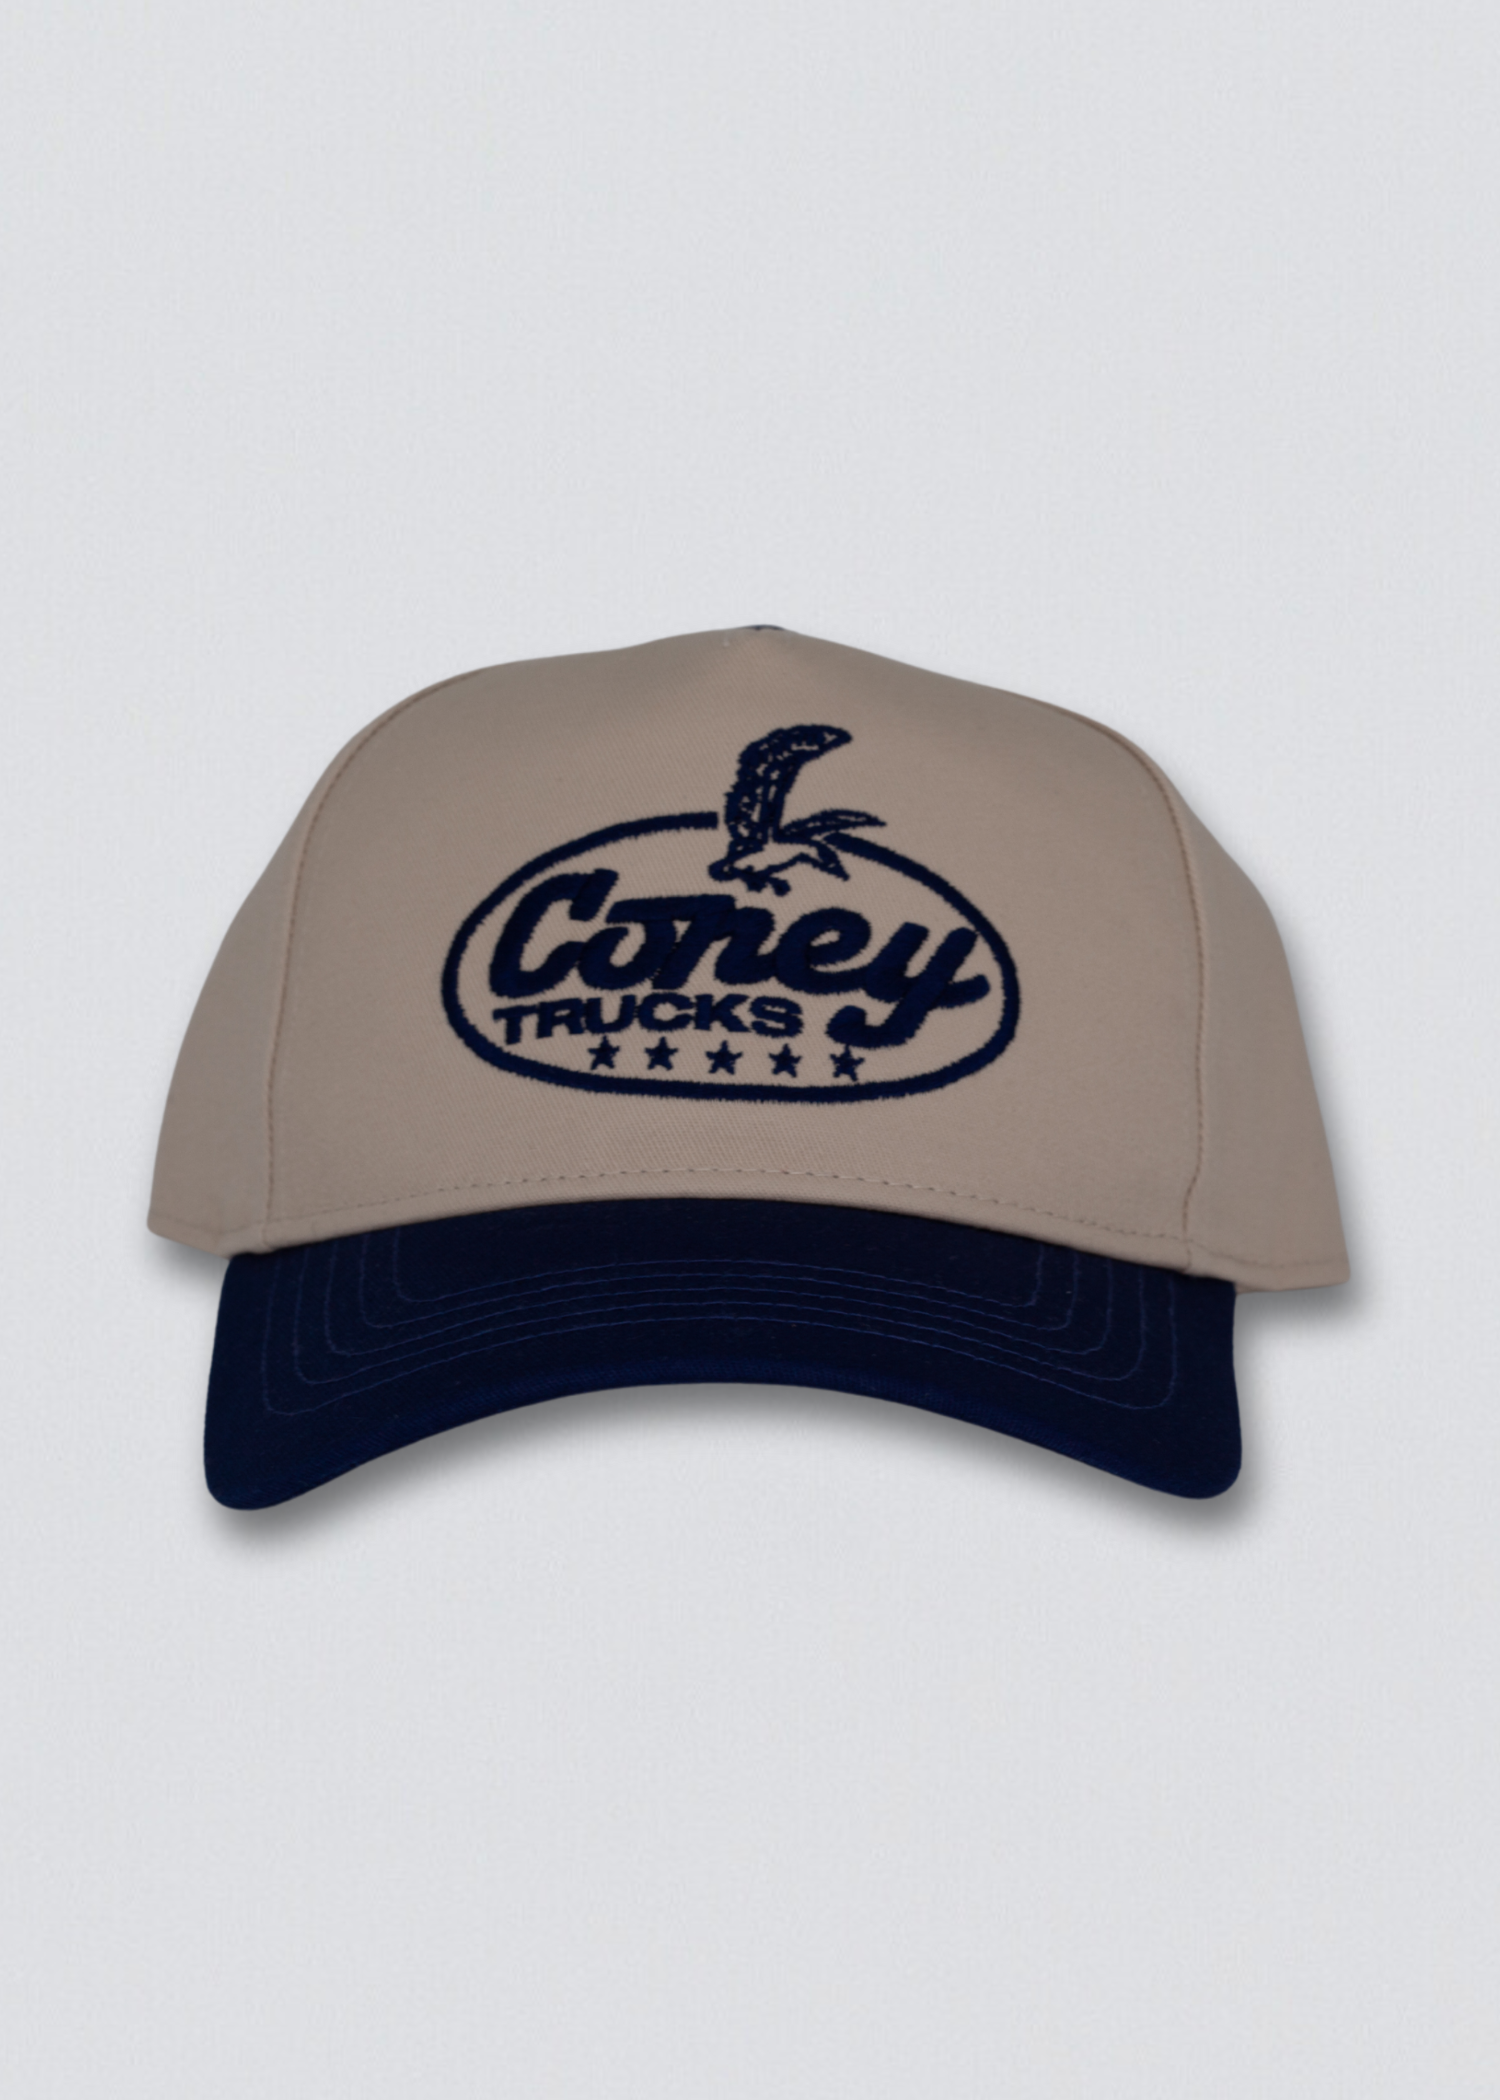 Coney Trucks Snapback Hat